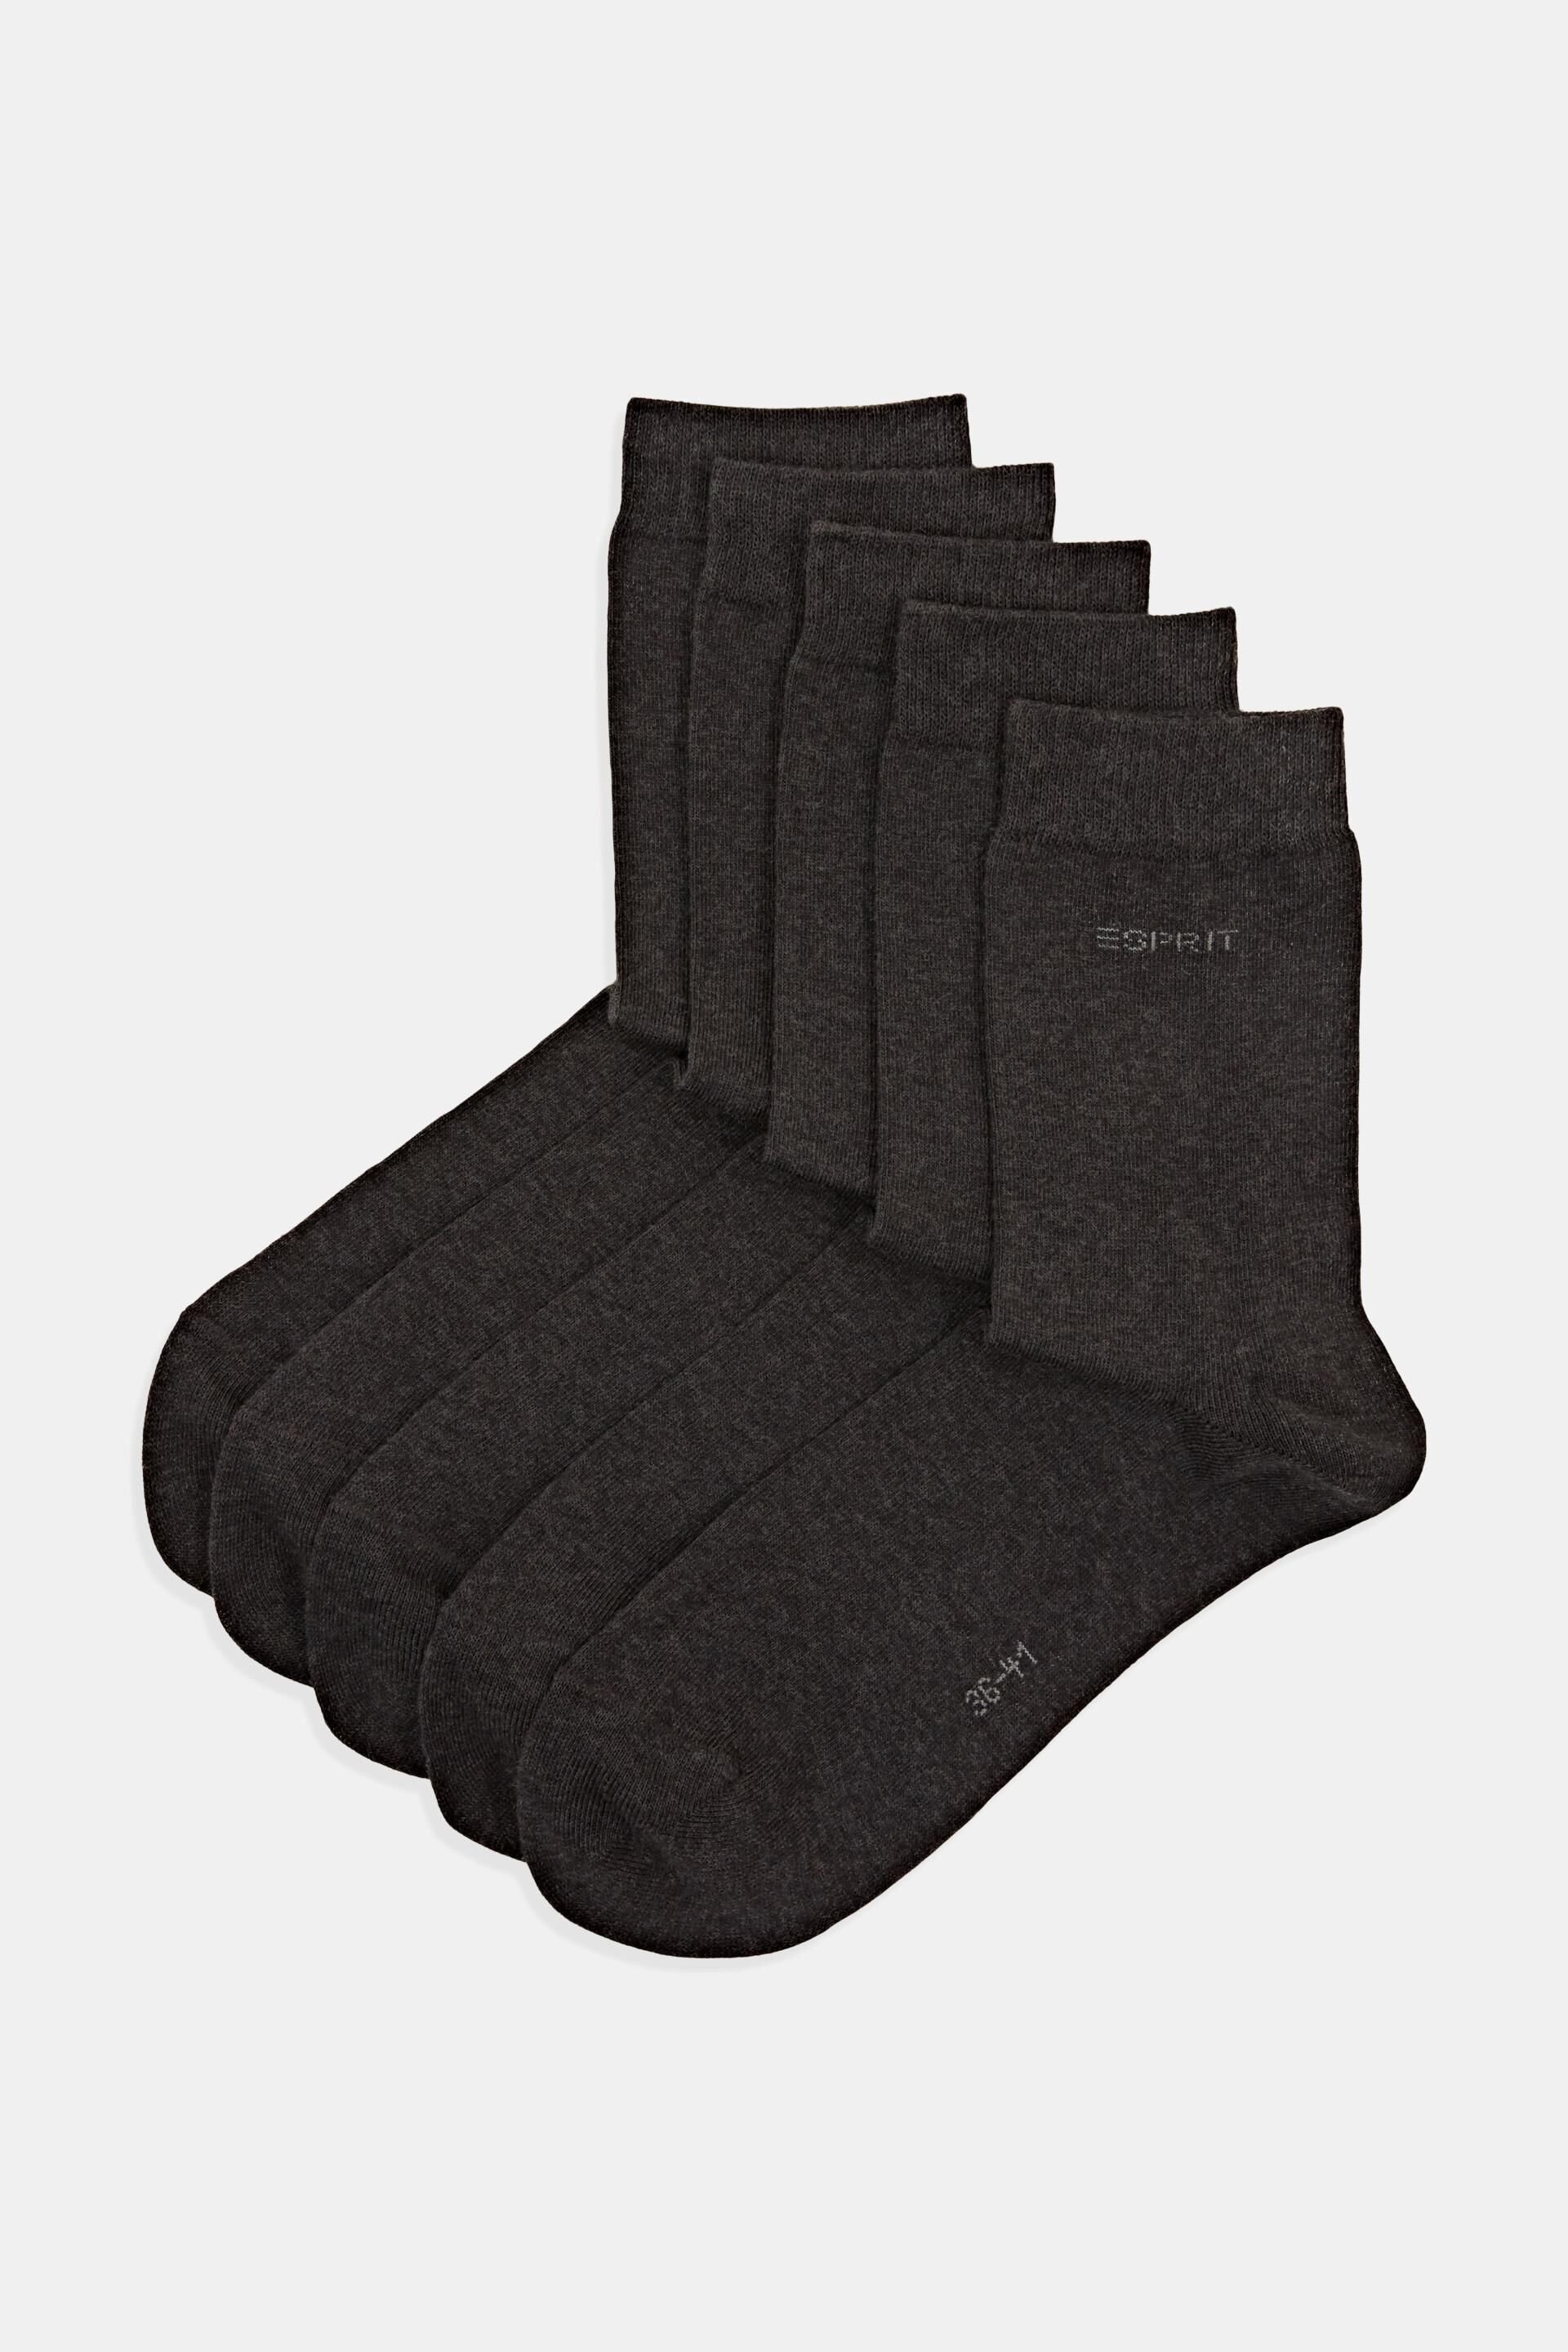 Esprit Pack cotton of 5 organic plain socks,